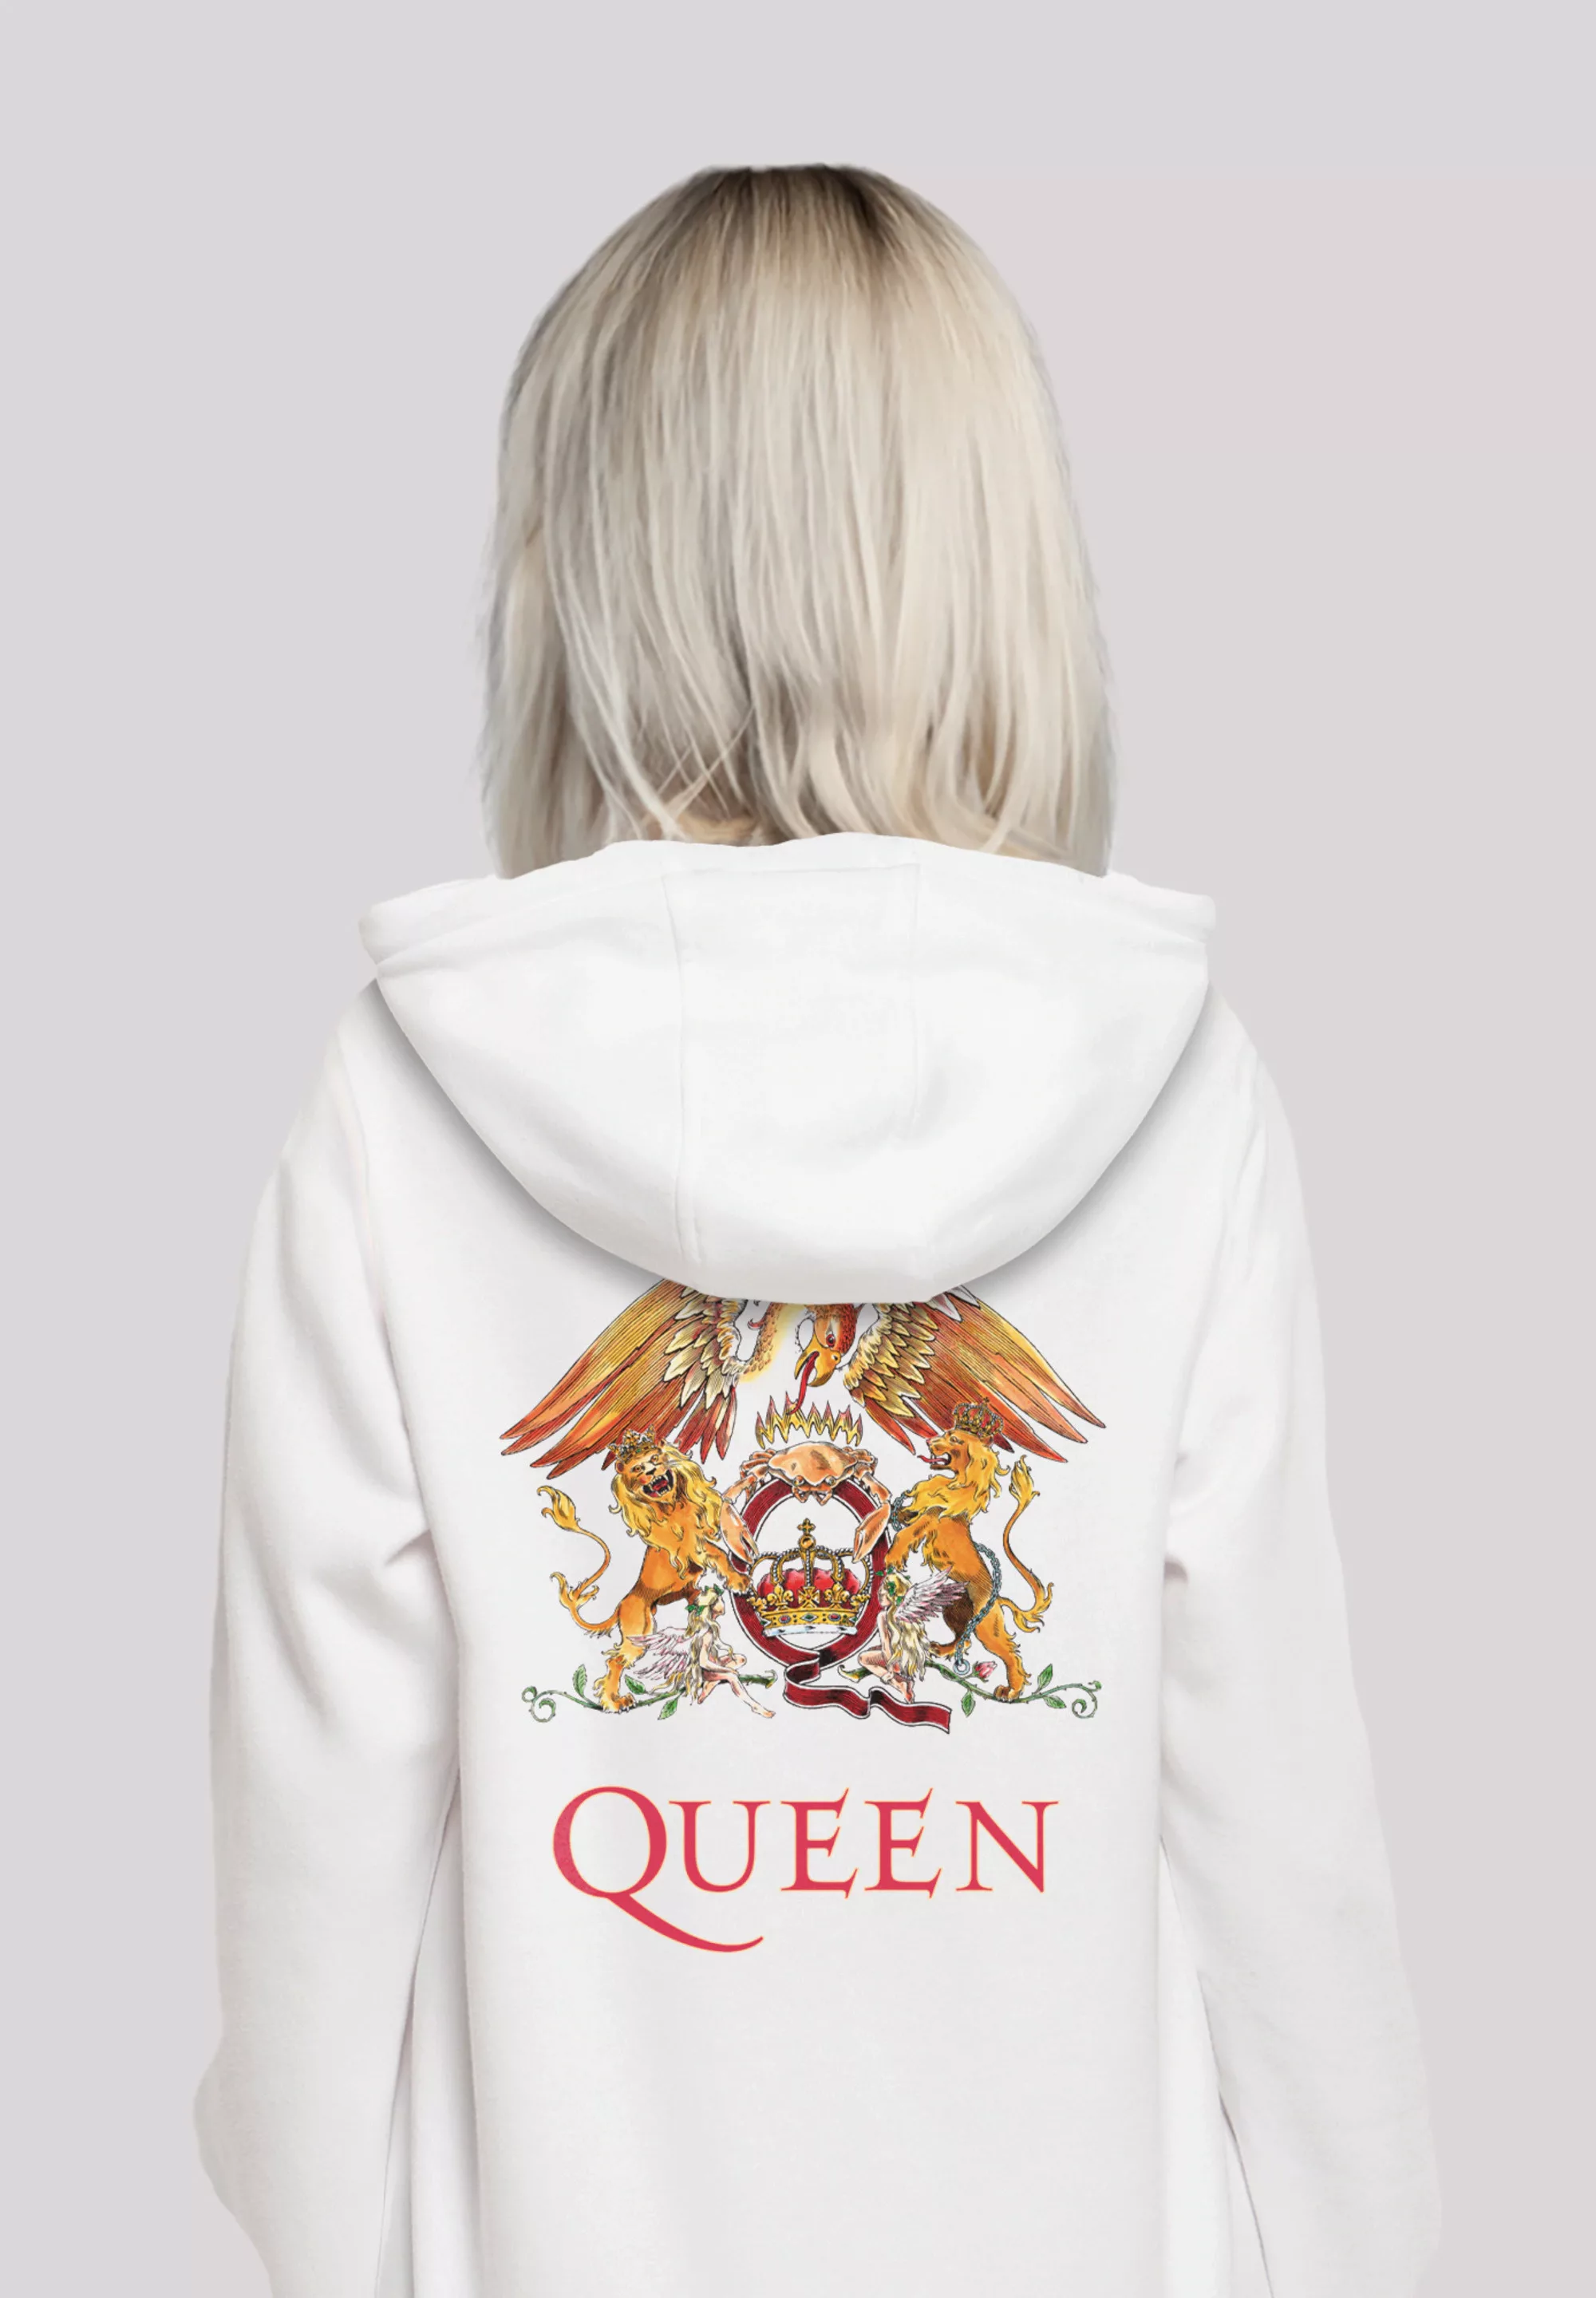 F4NT4STIC Kapuzenpullover "Queen Classic Logo Rock Musik Band" günstig online kaufen